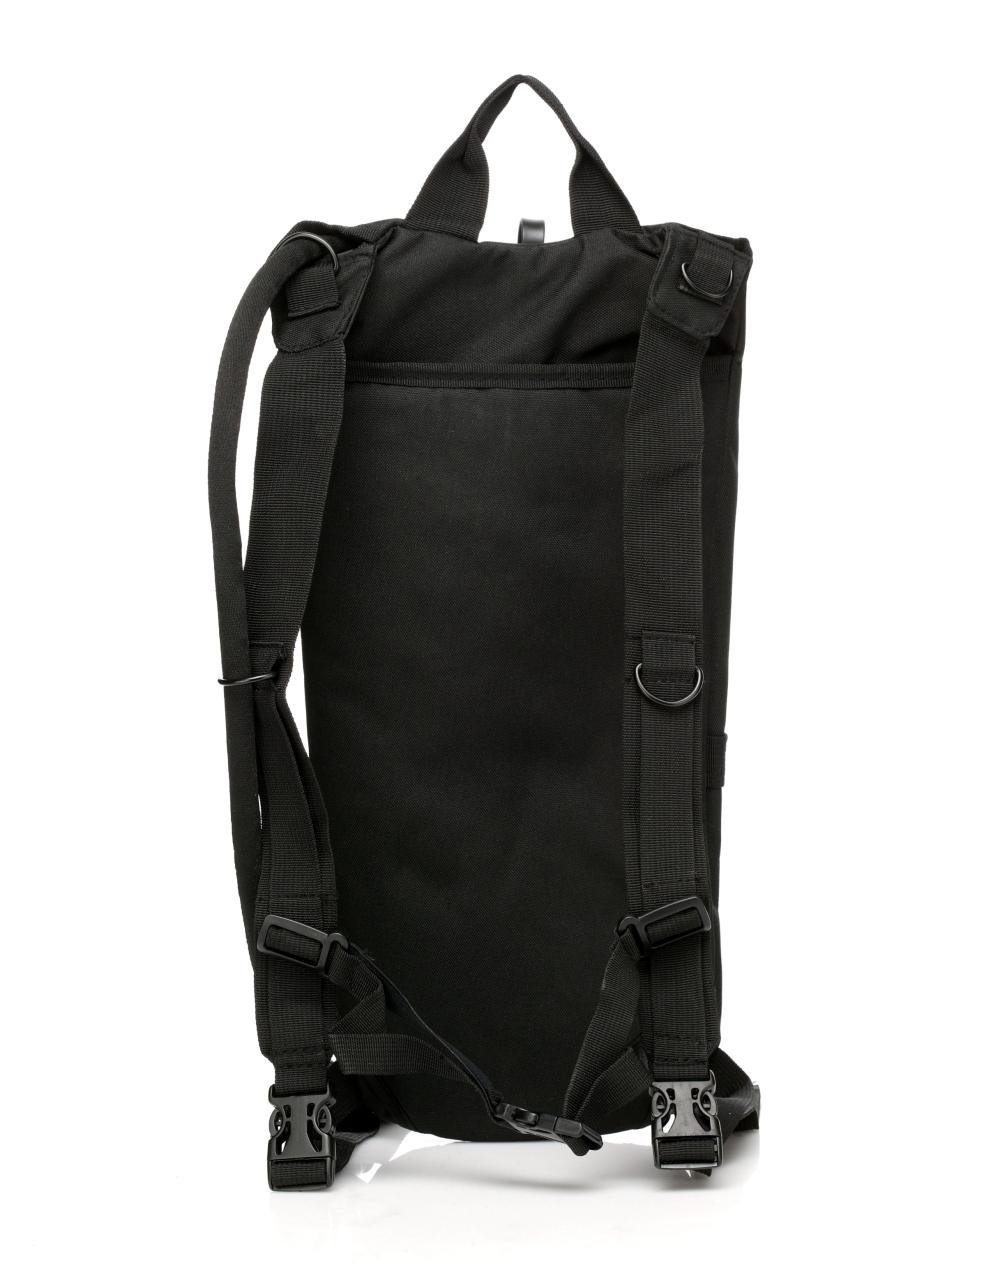 hydration backpack (black) 2